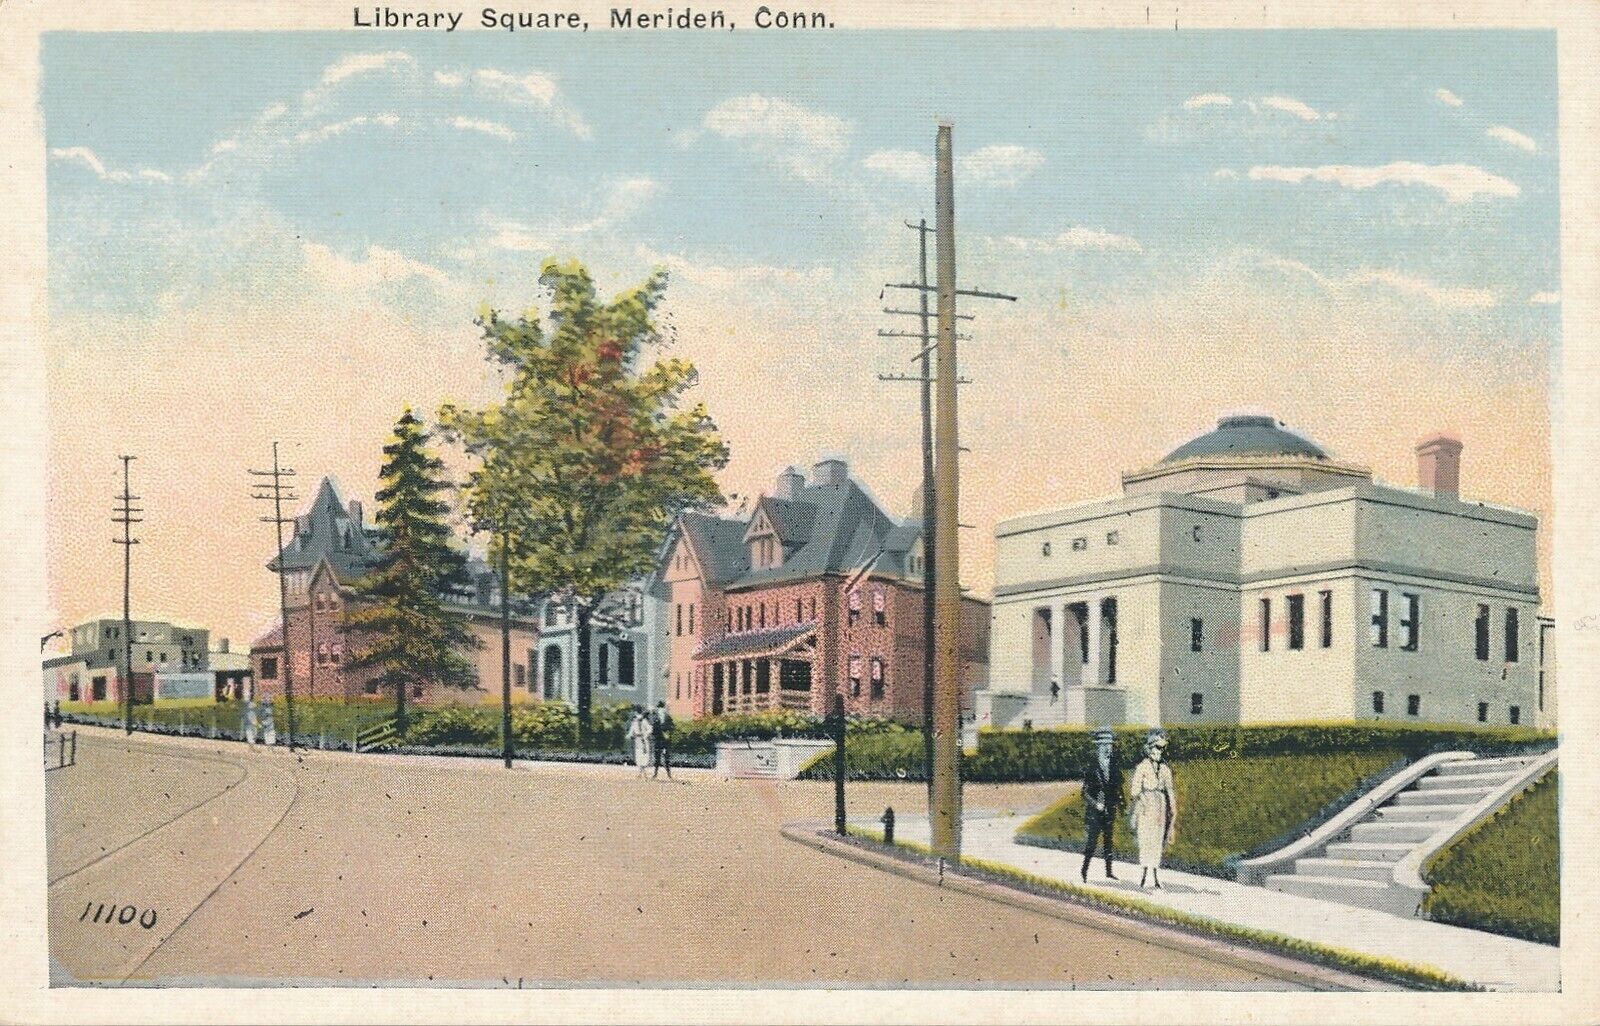 MERIDEN CT – Library Square